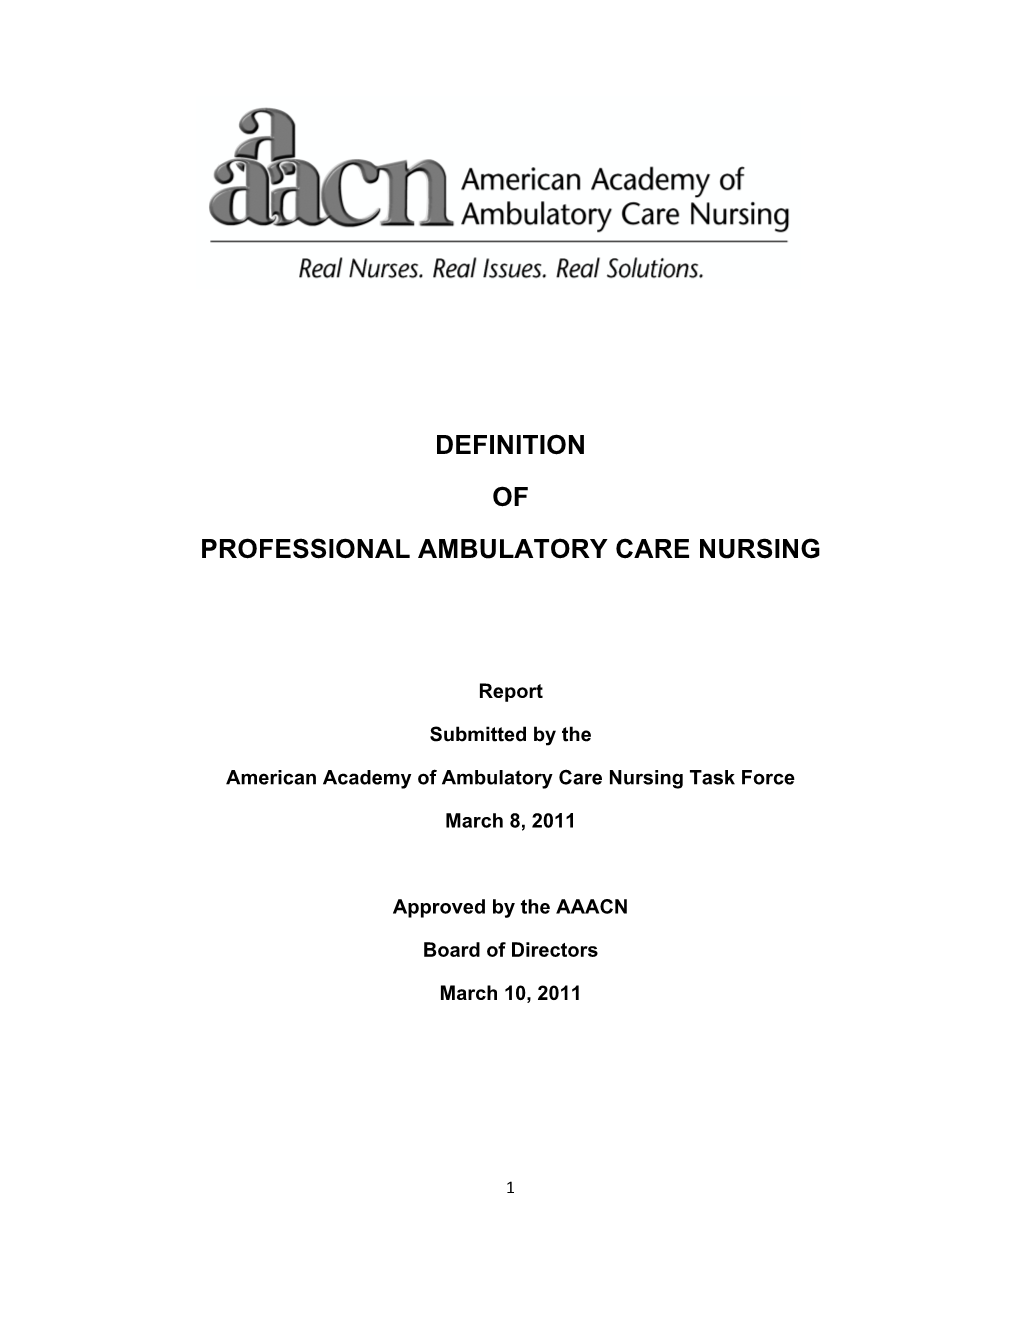 Definition of Professional Ambulatory Care Nursing